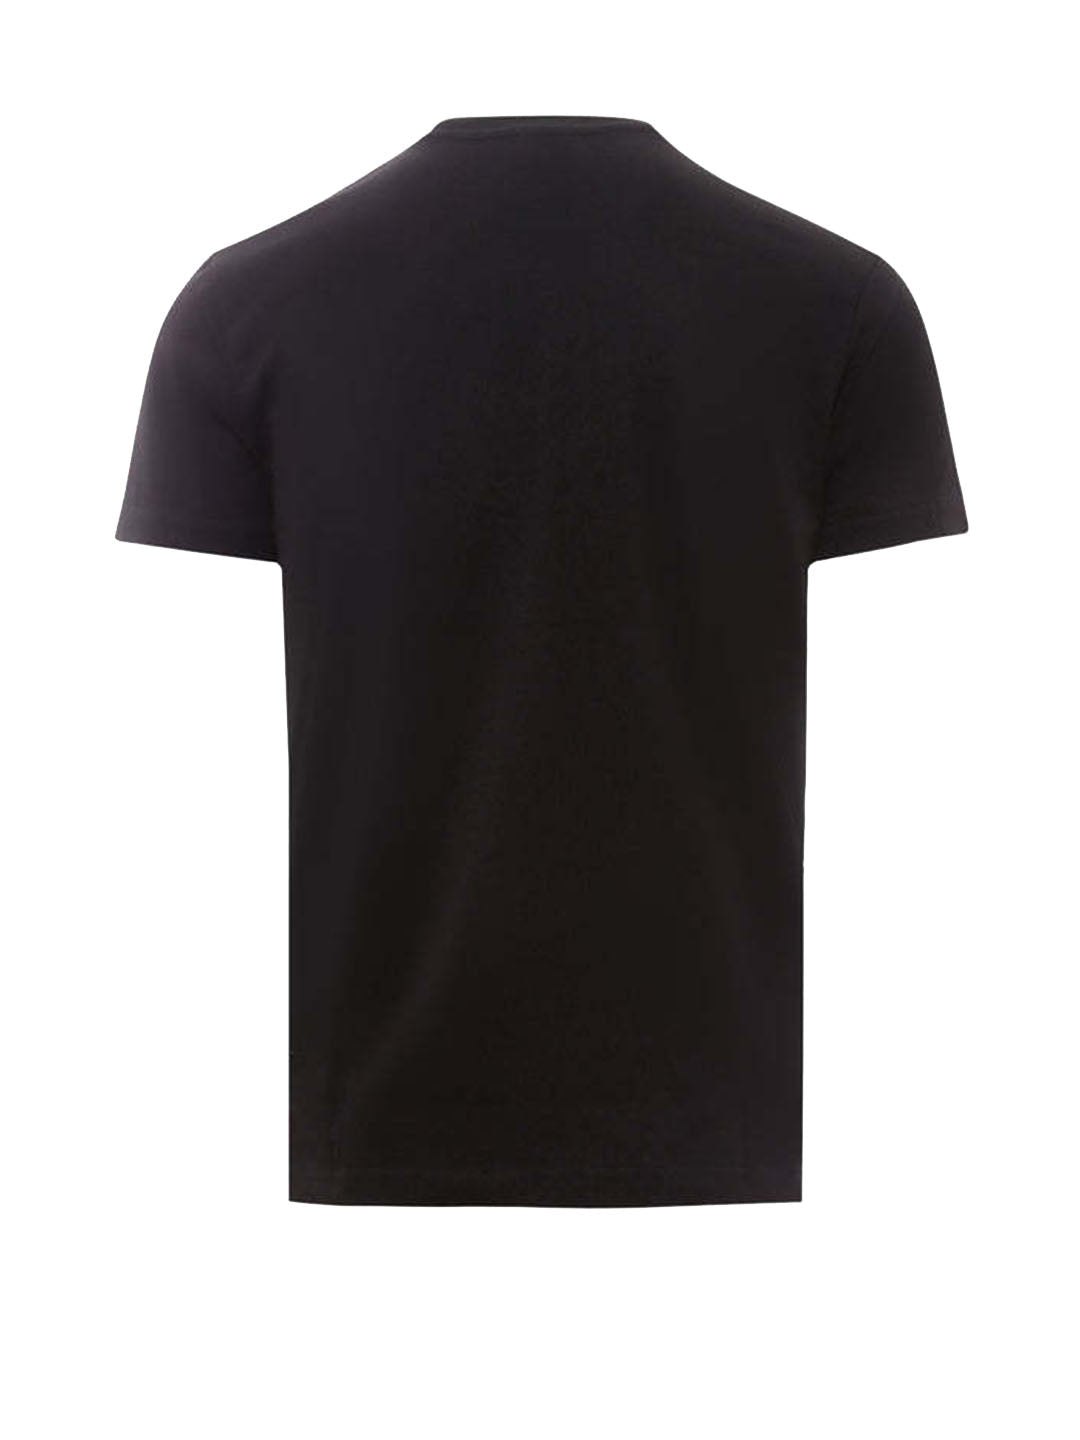 DIESEL black cotton T-shirt